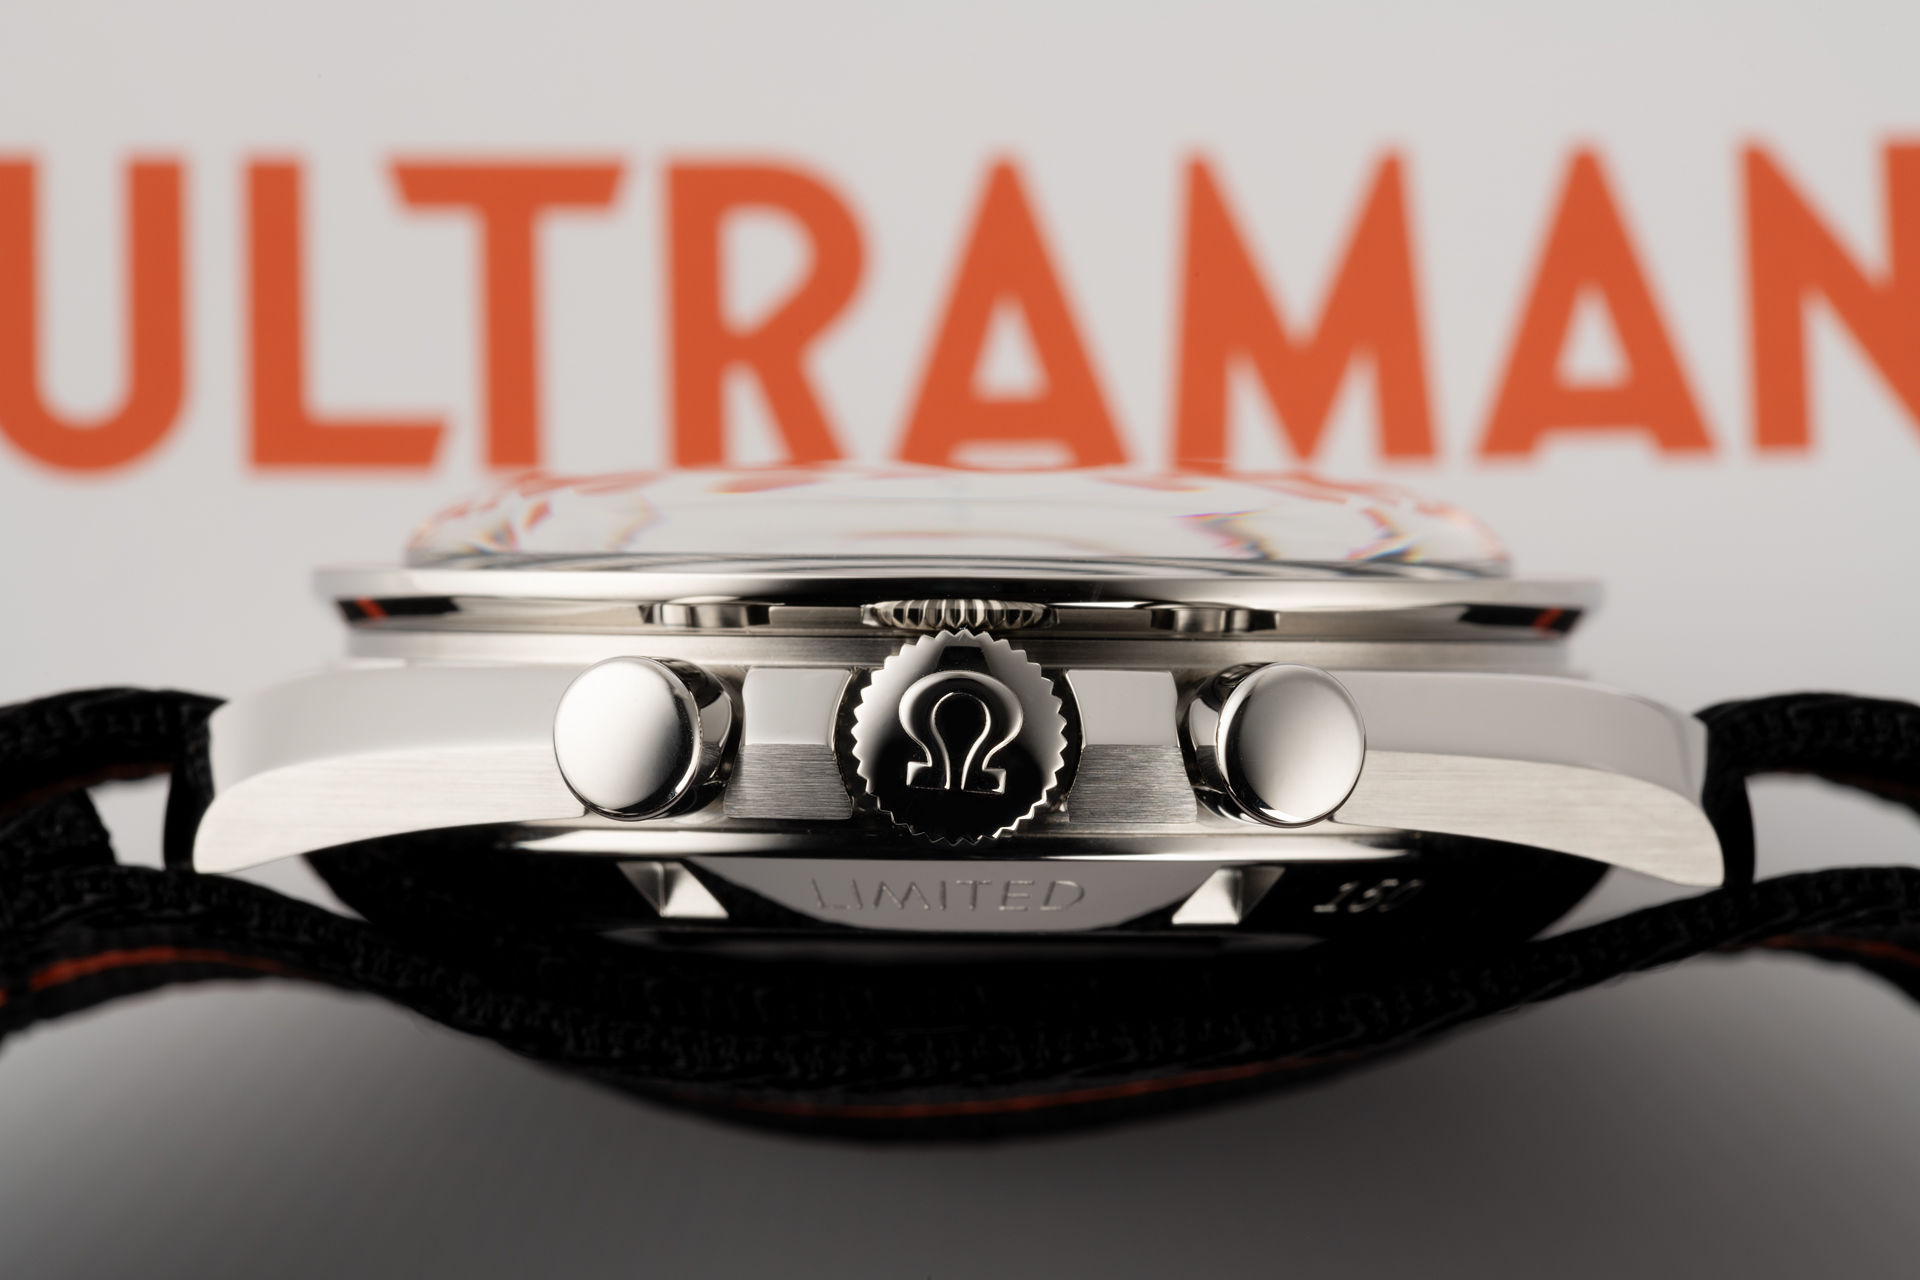 ref 31112423001001 | Brand New Limited Edition | Omega Speedmaster Ultraman